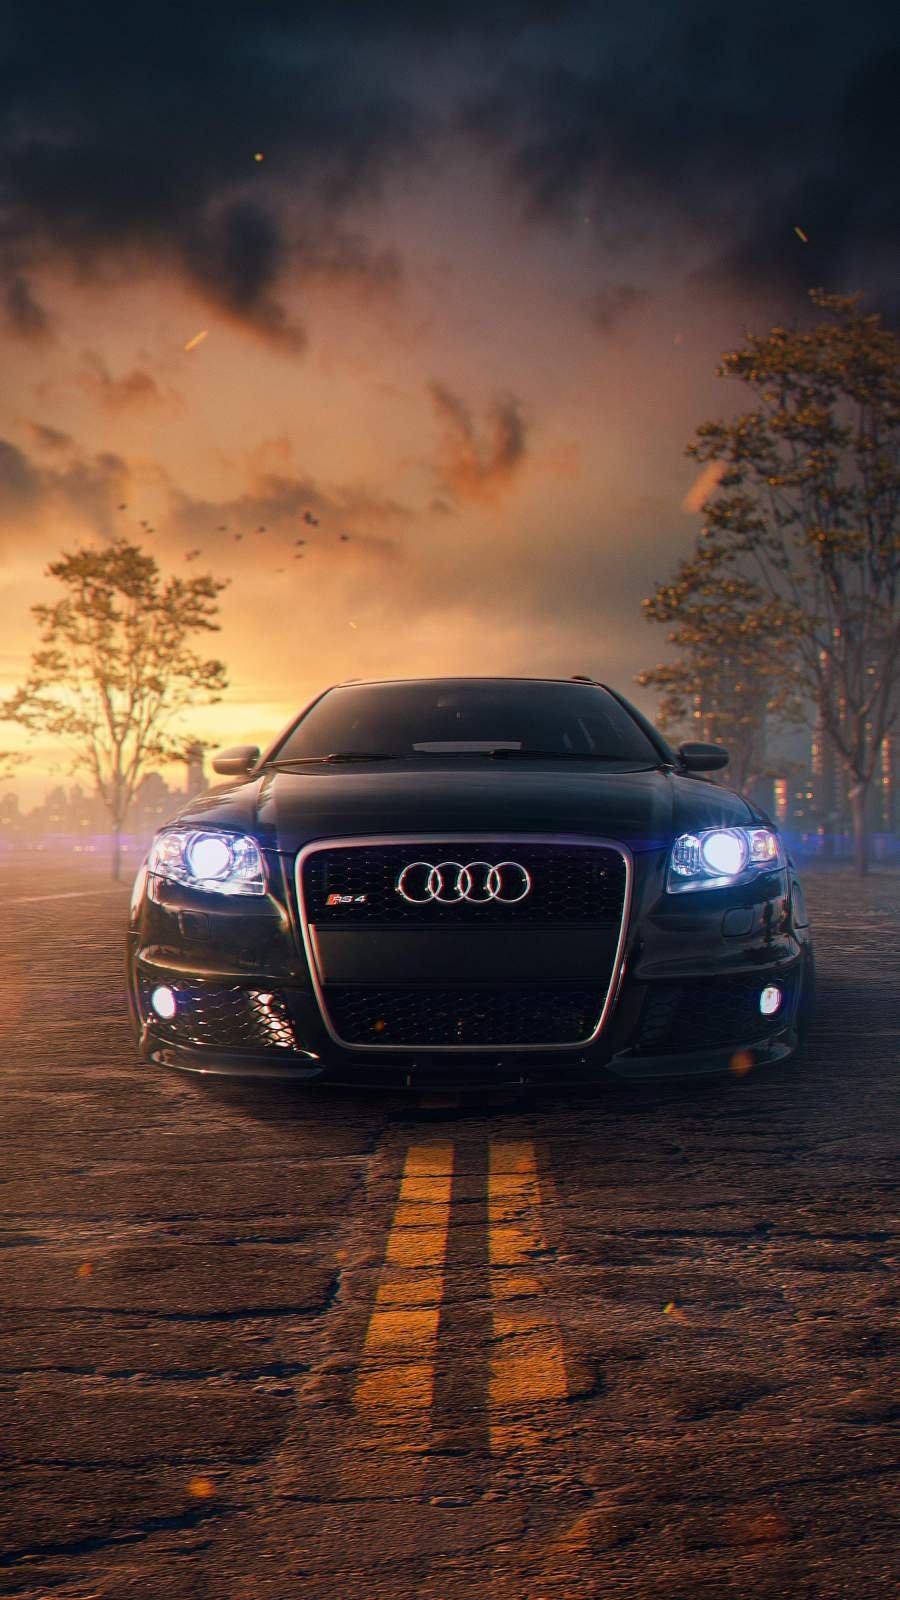 Parking in dark area with Audi headlights on 4K wallpaper download